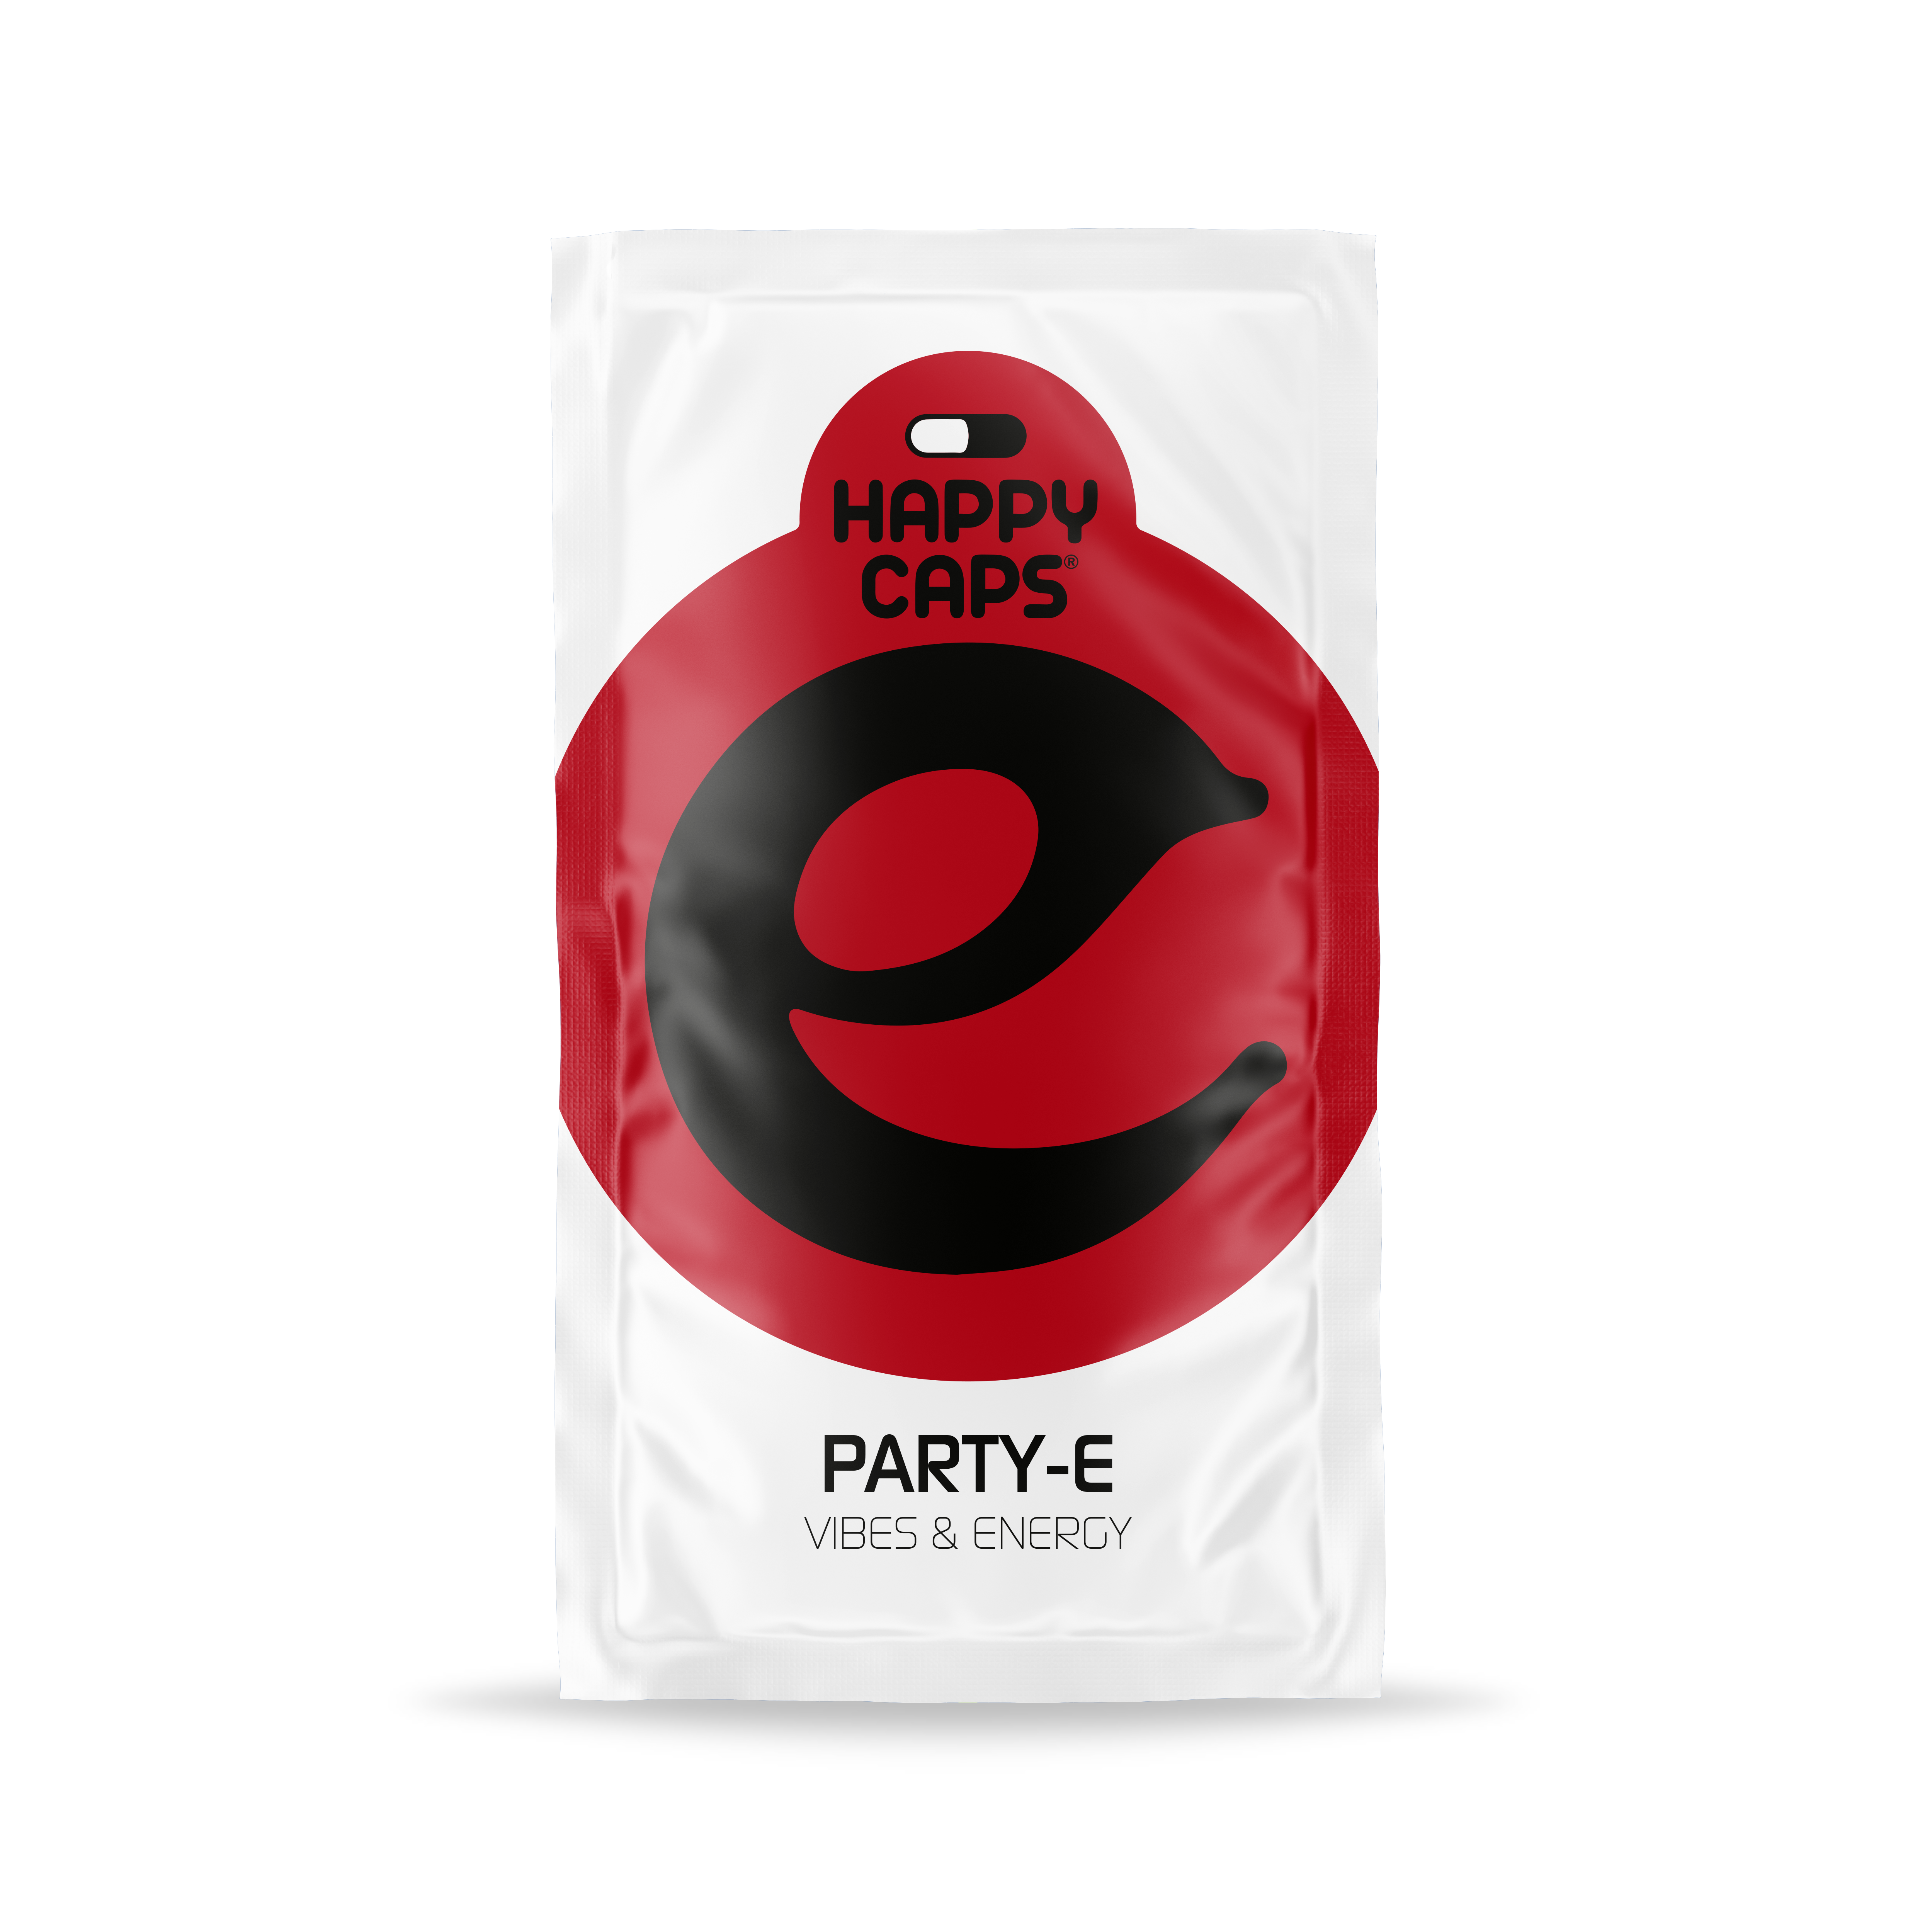 Happy Cap Party-E